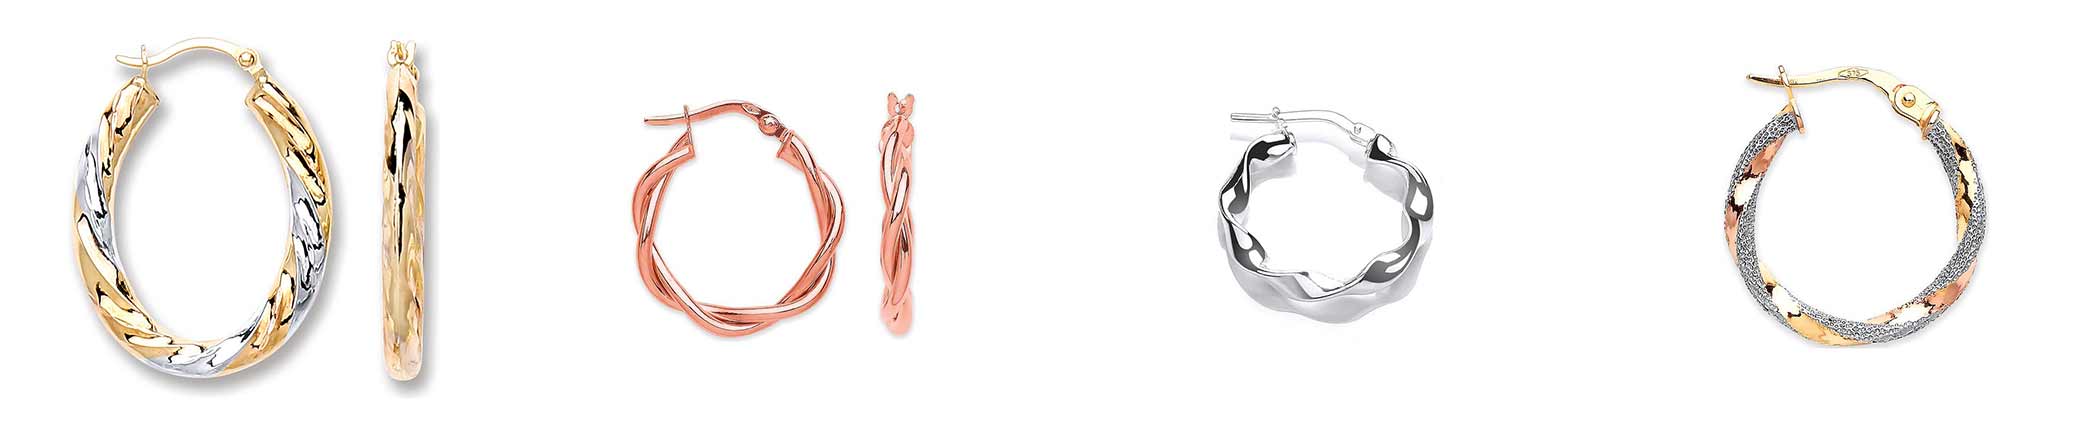 <font color=#000000>13 ways to accessorise twist hoop earrings</font>